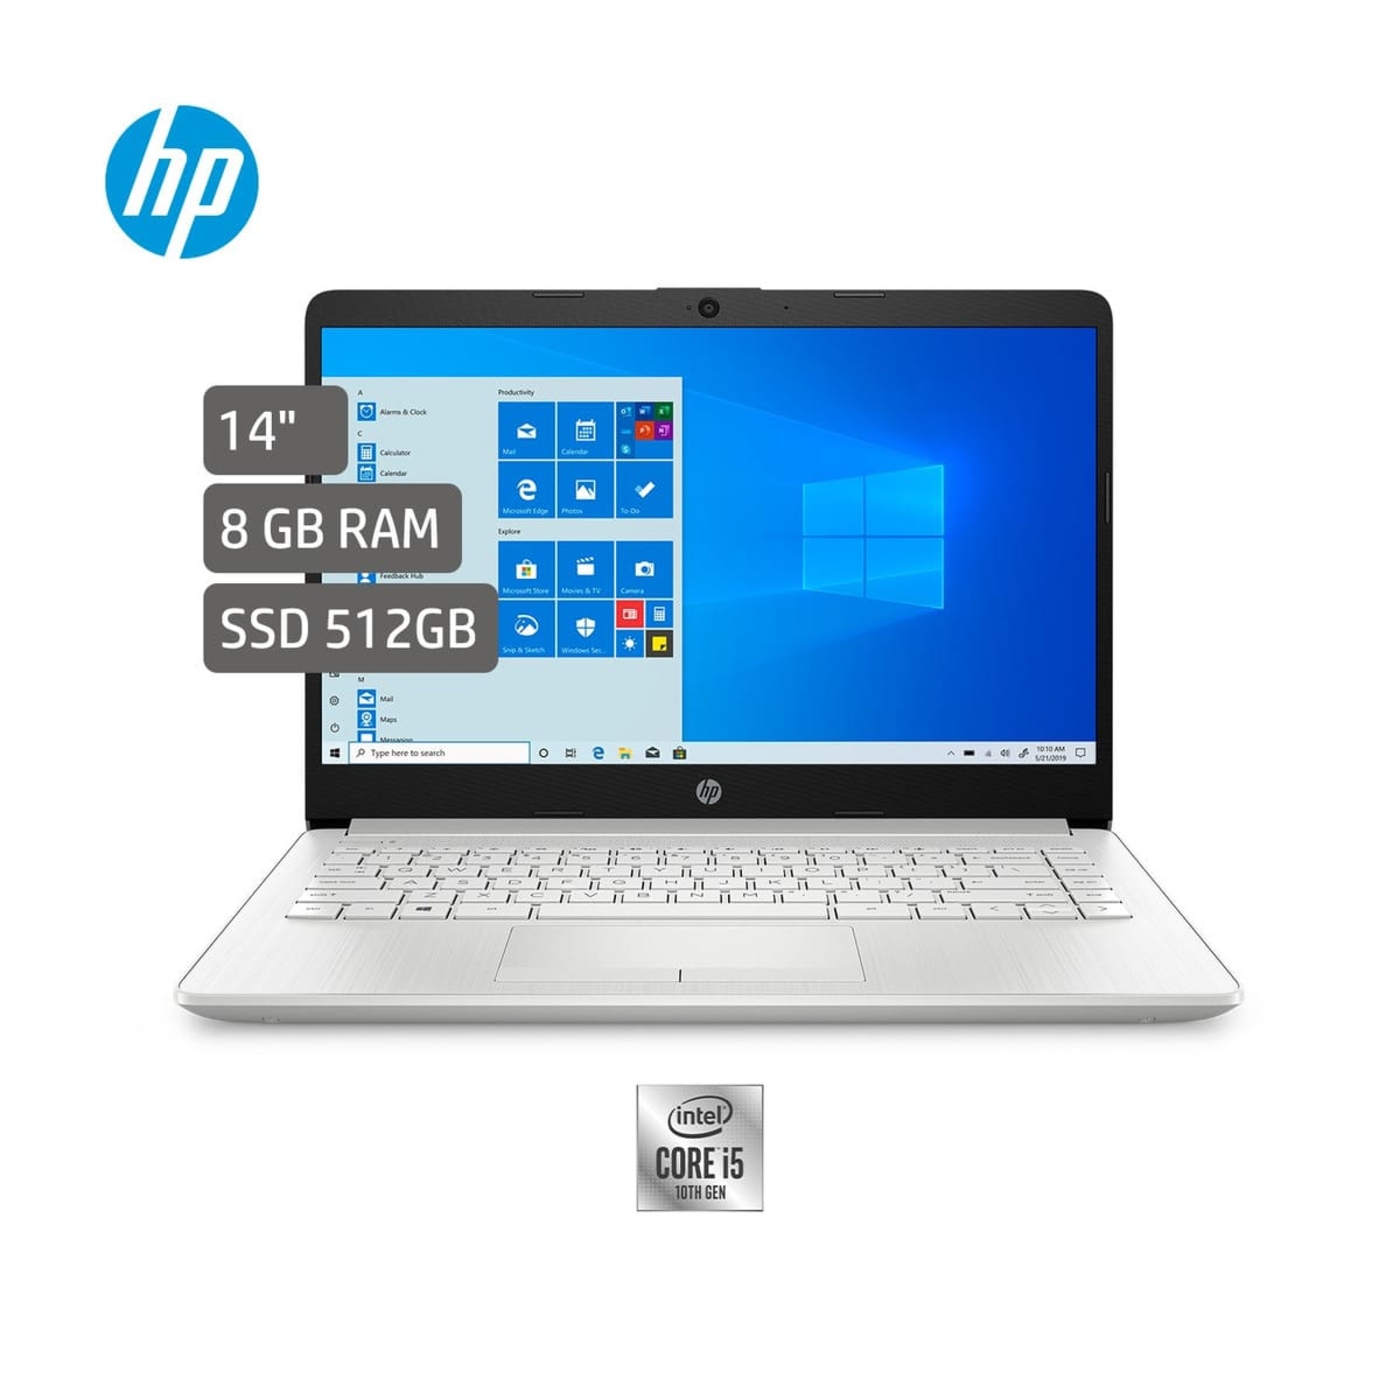 Computador Portátil HP 14" Pulgadas cf2076la - Intel Core i5 - RAM 8GB - Disco SSD 512 GB - Plata